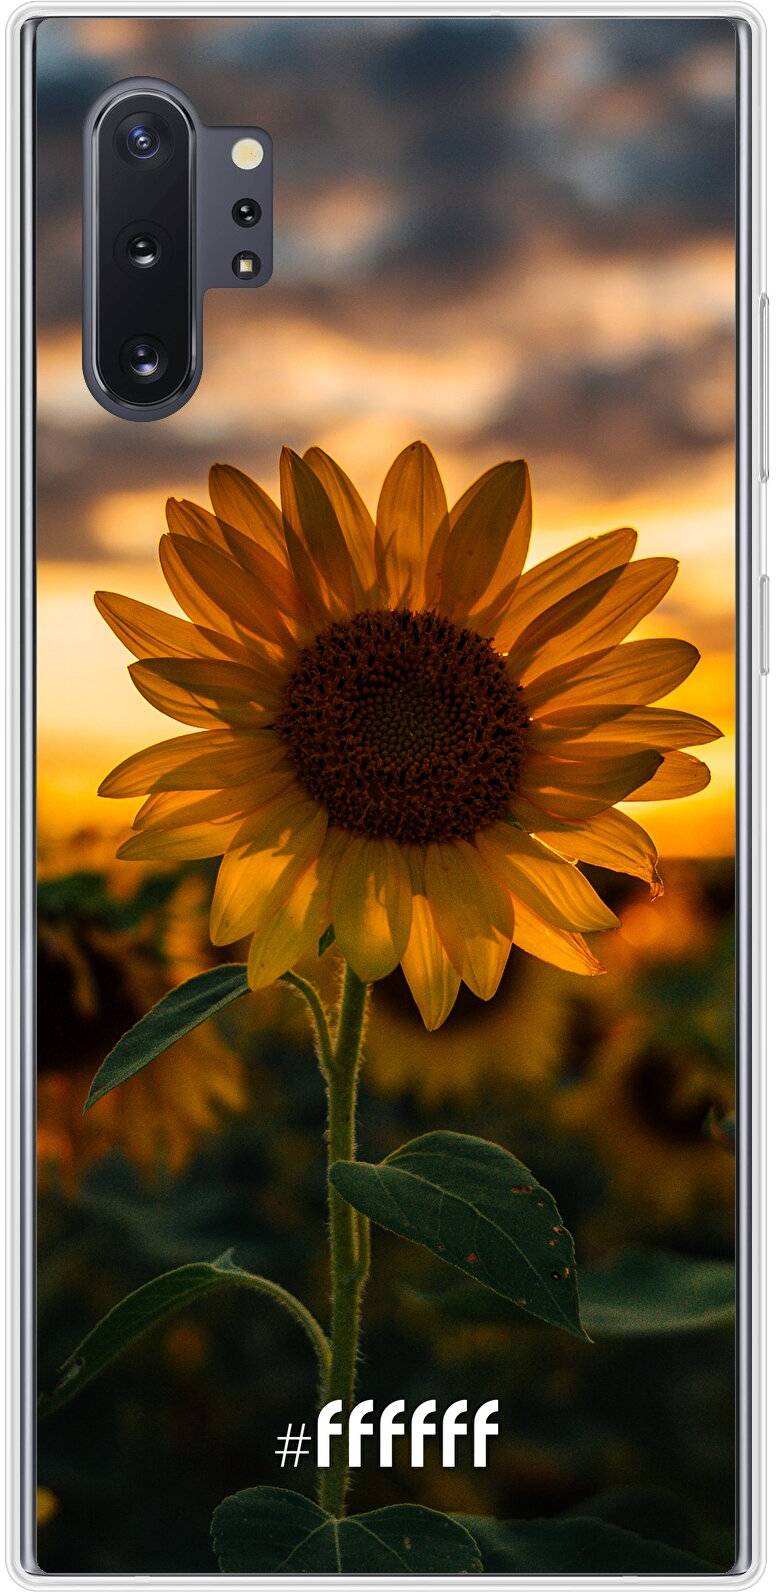 Sunset Sunflower Galaxy Note 10 Plus